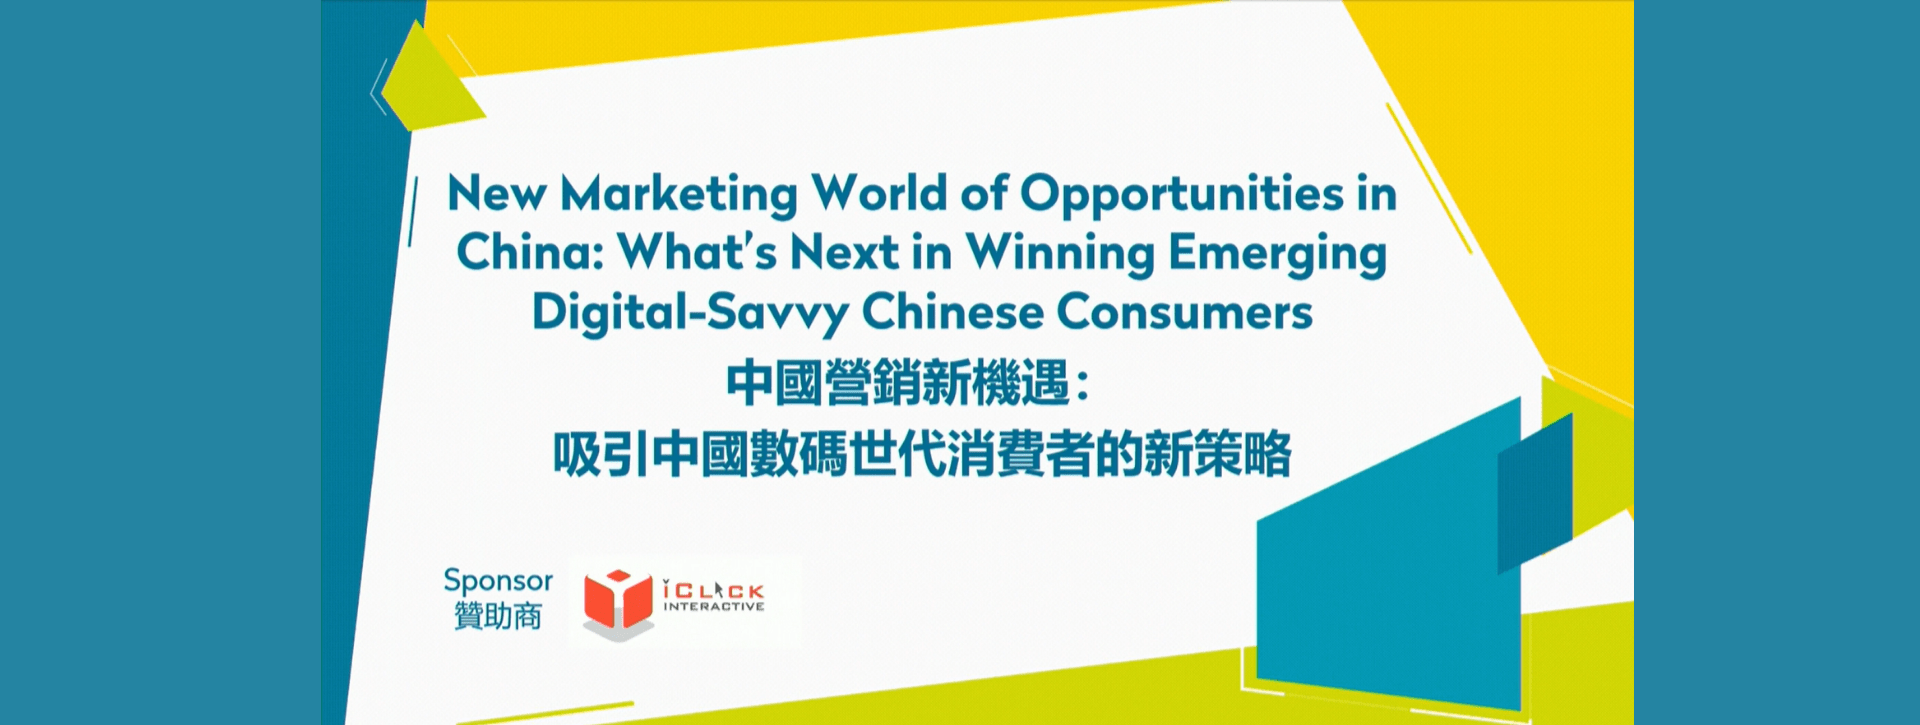 iClick’s Exclusive Digital Marketing Workshop at MarketingPulse ONLINE 2021